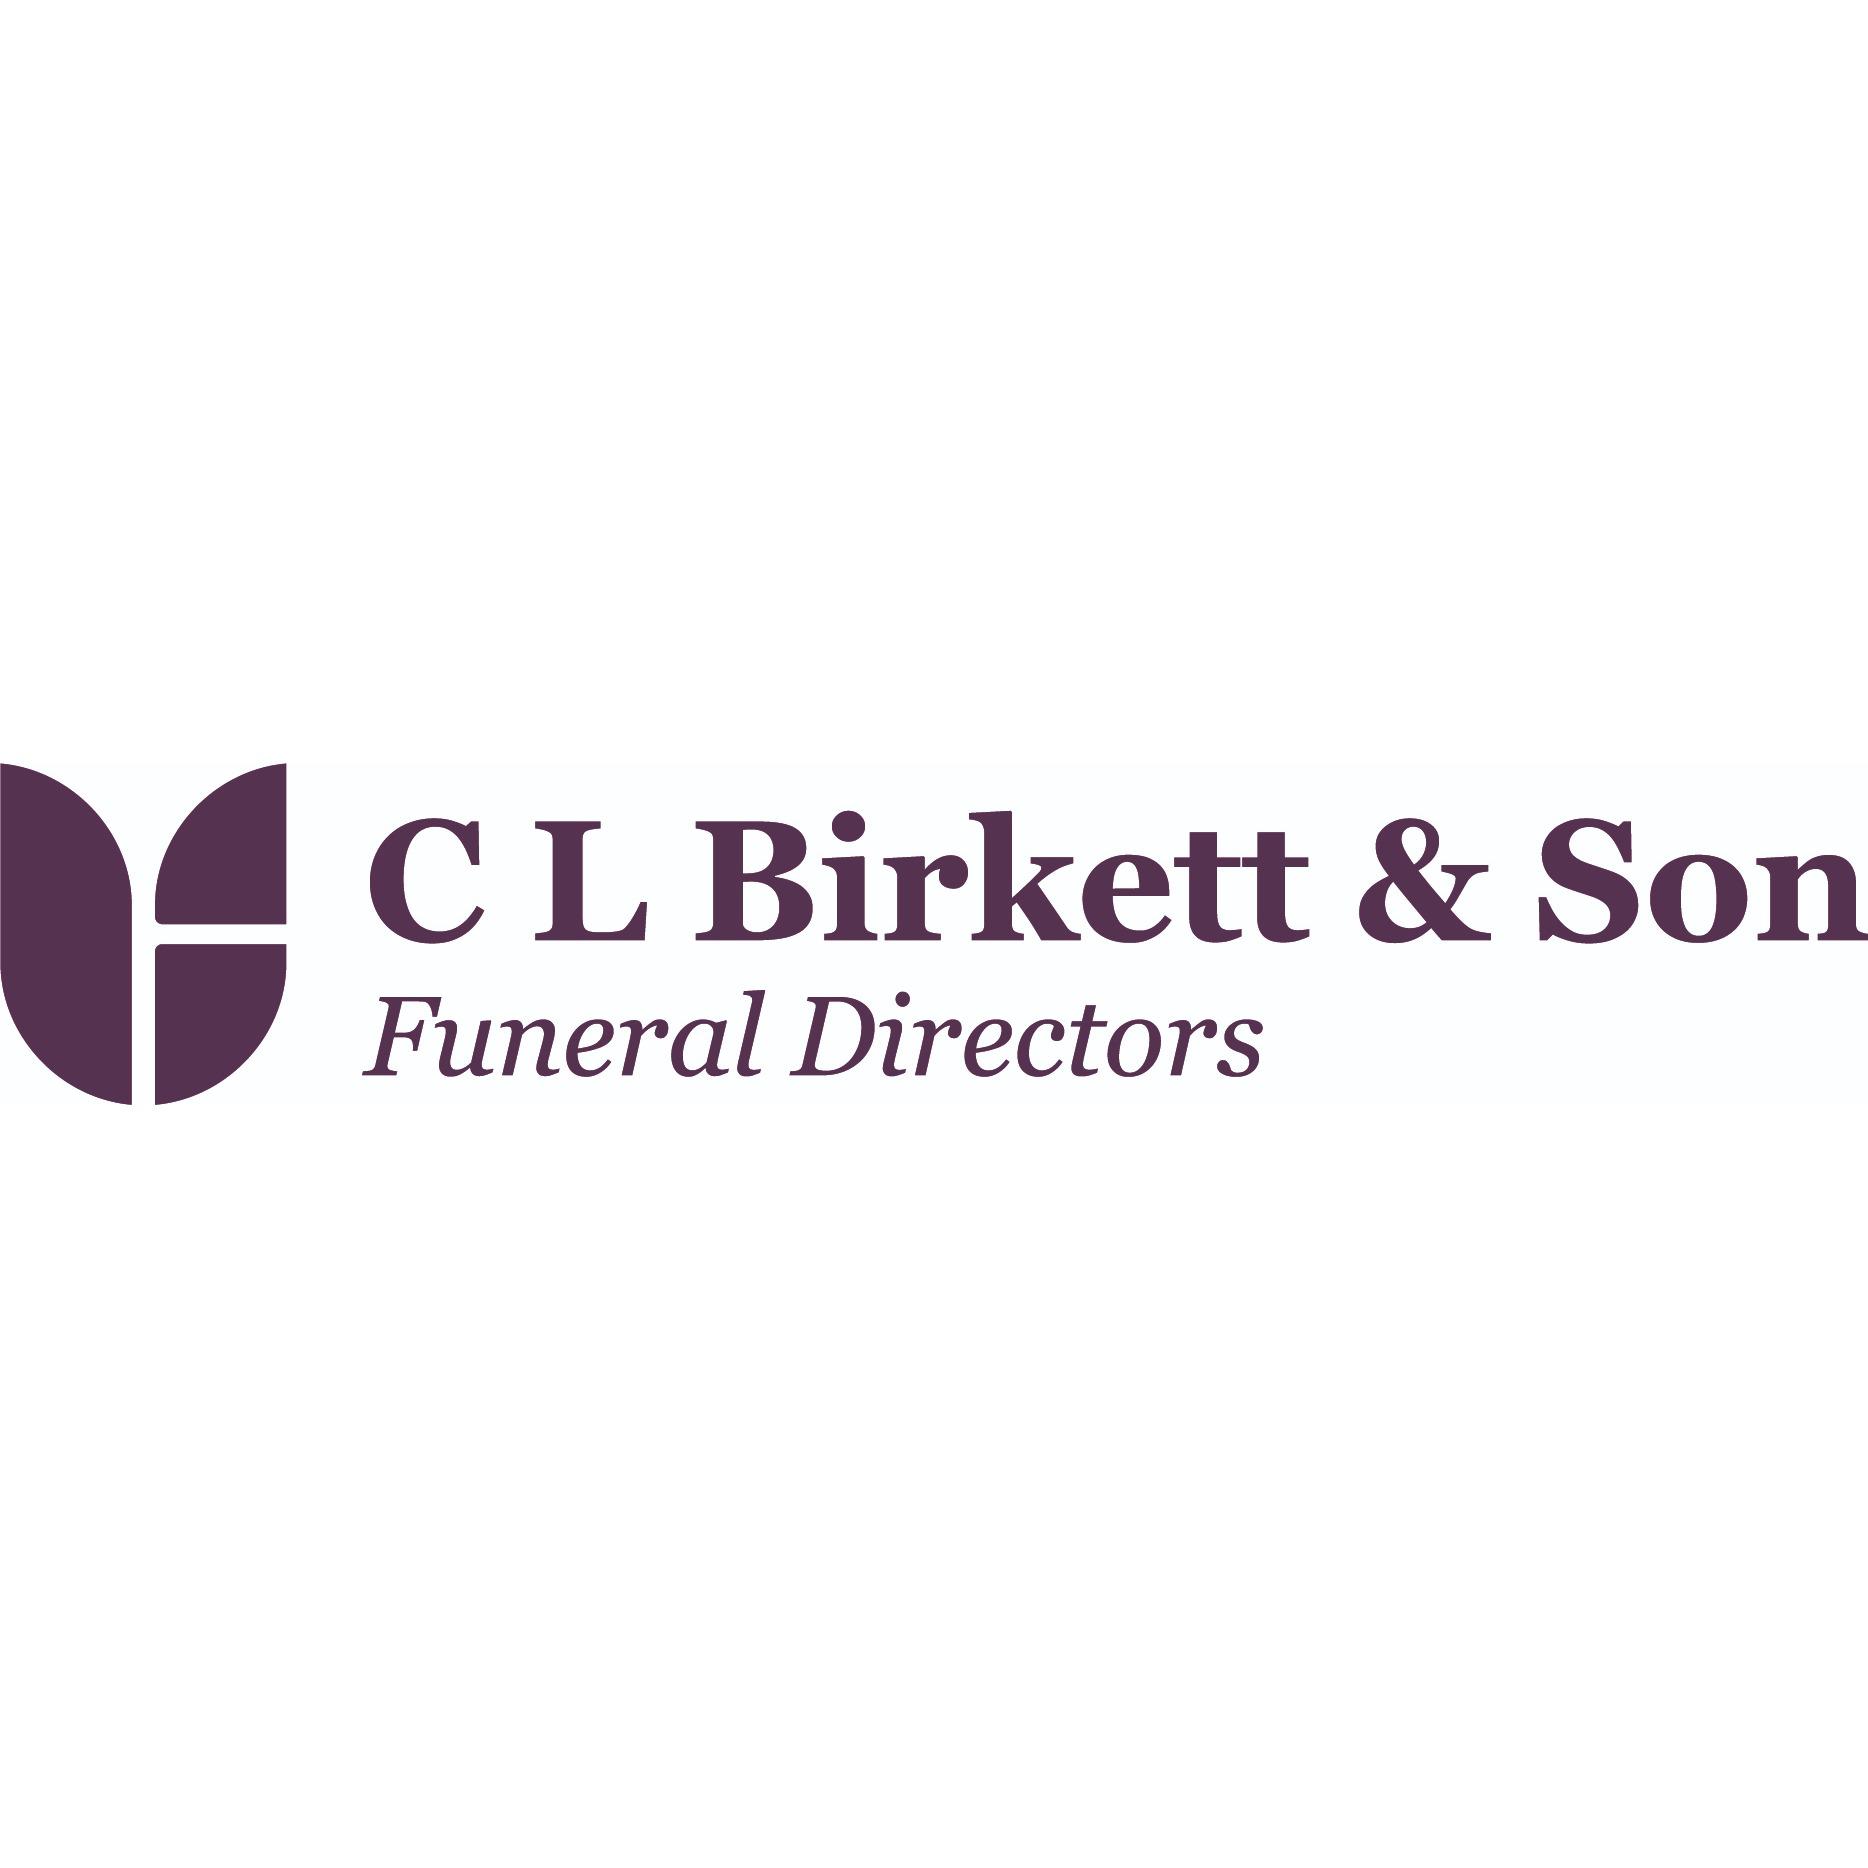 C L Birkett & Son Funeral Directors - Manchester, Lancashire M41 9AX - 01613 832080 | ShowMeLocal.com